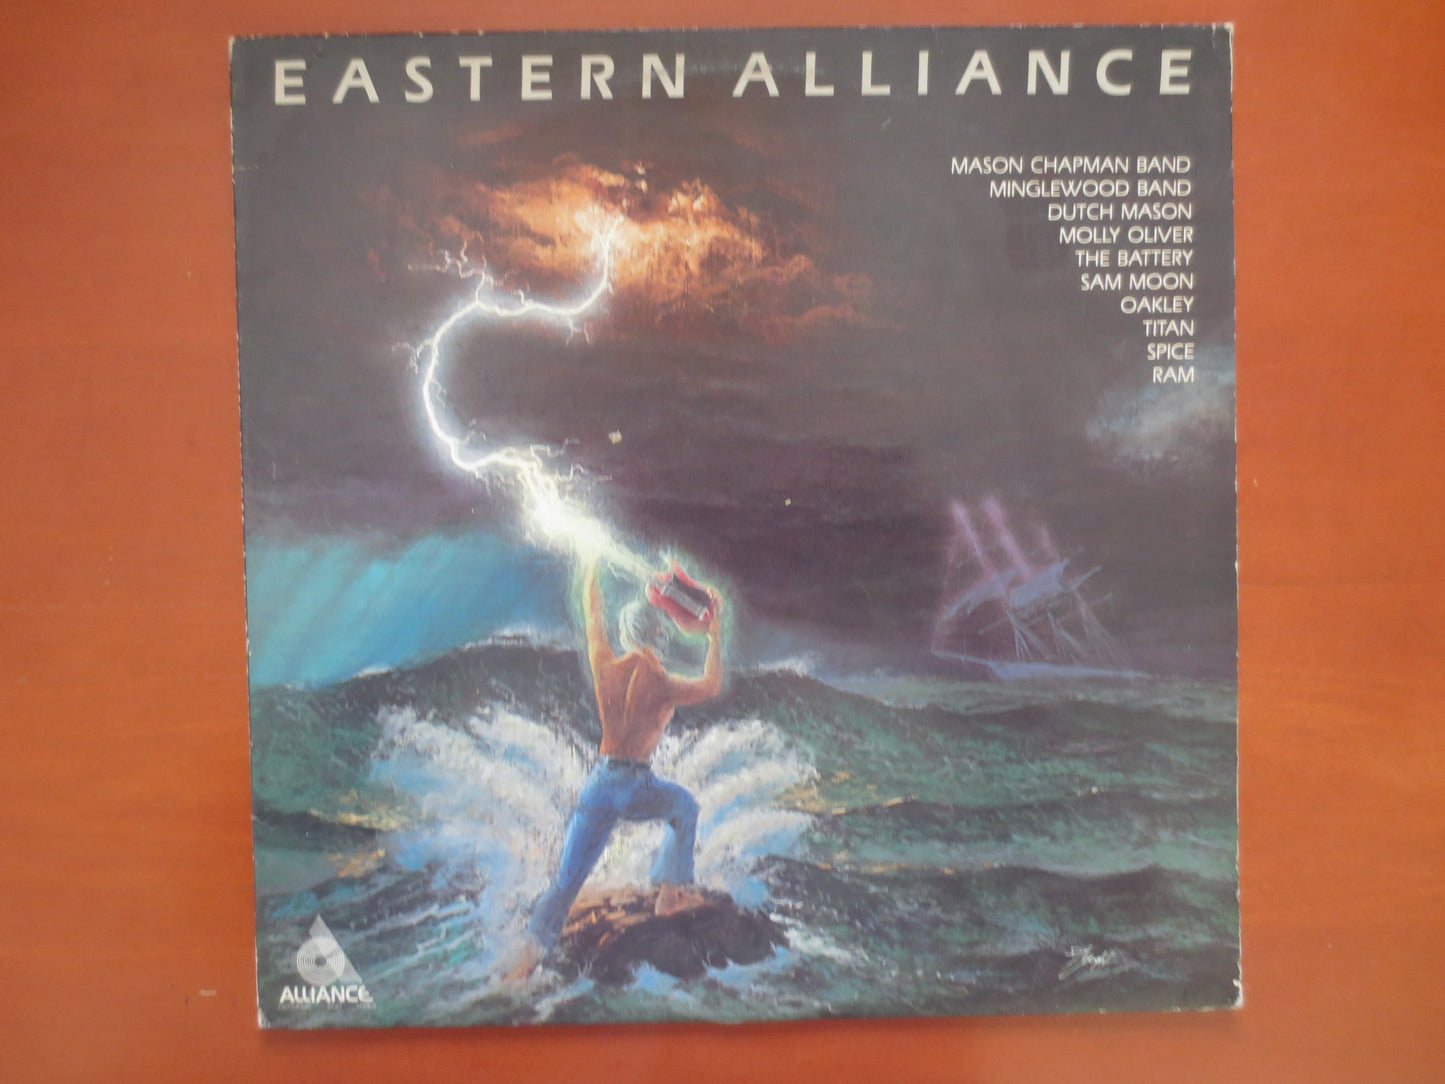 EASTERN ALLIANCE, Mason Chapman Band, MINGLEWOOD Band, Dutch Mason, The Battery, Sam Moon, Oakley, Titan, Ram, 1982 Records